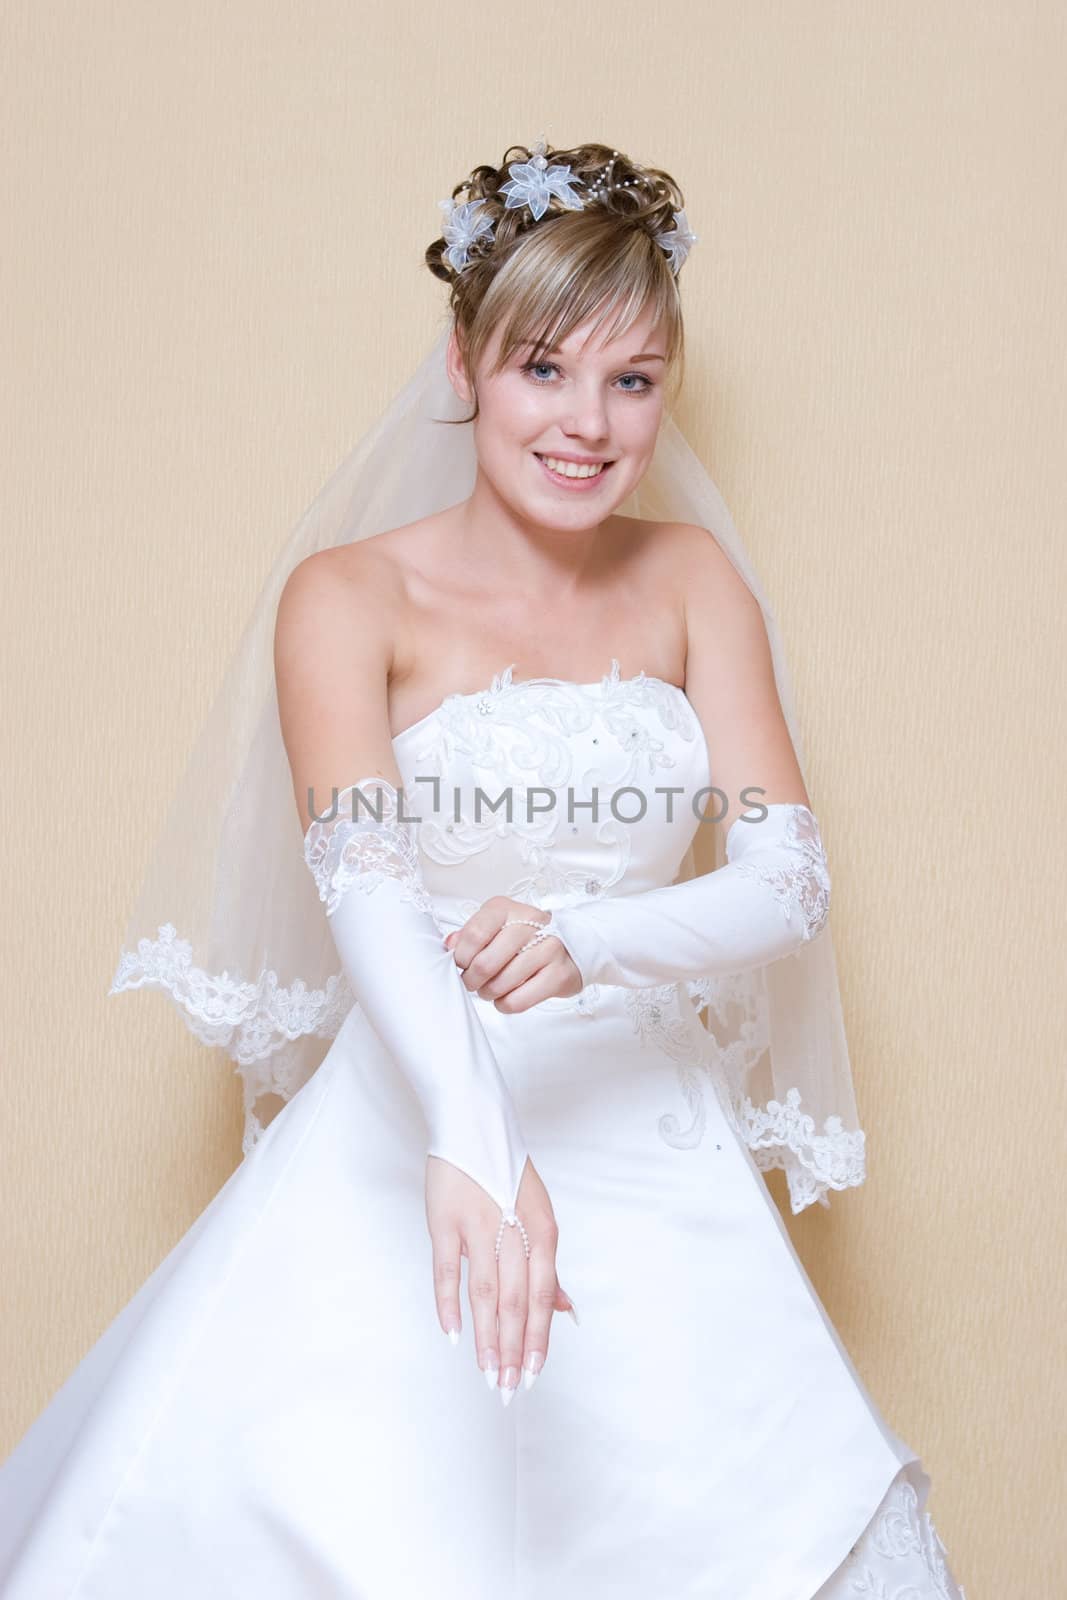 bride puts on a glove by vsurkov